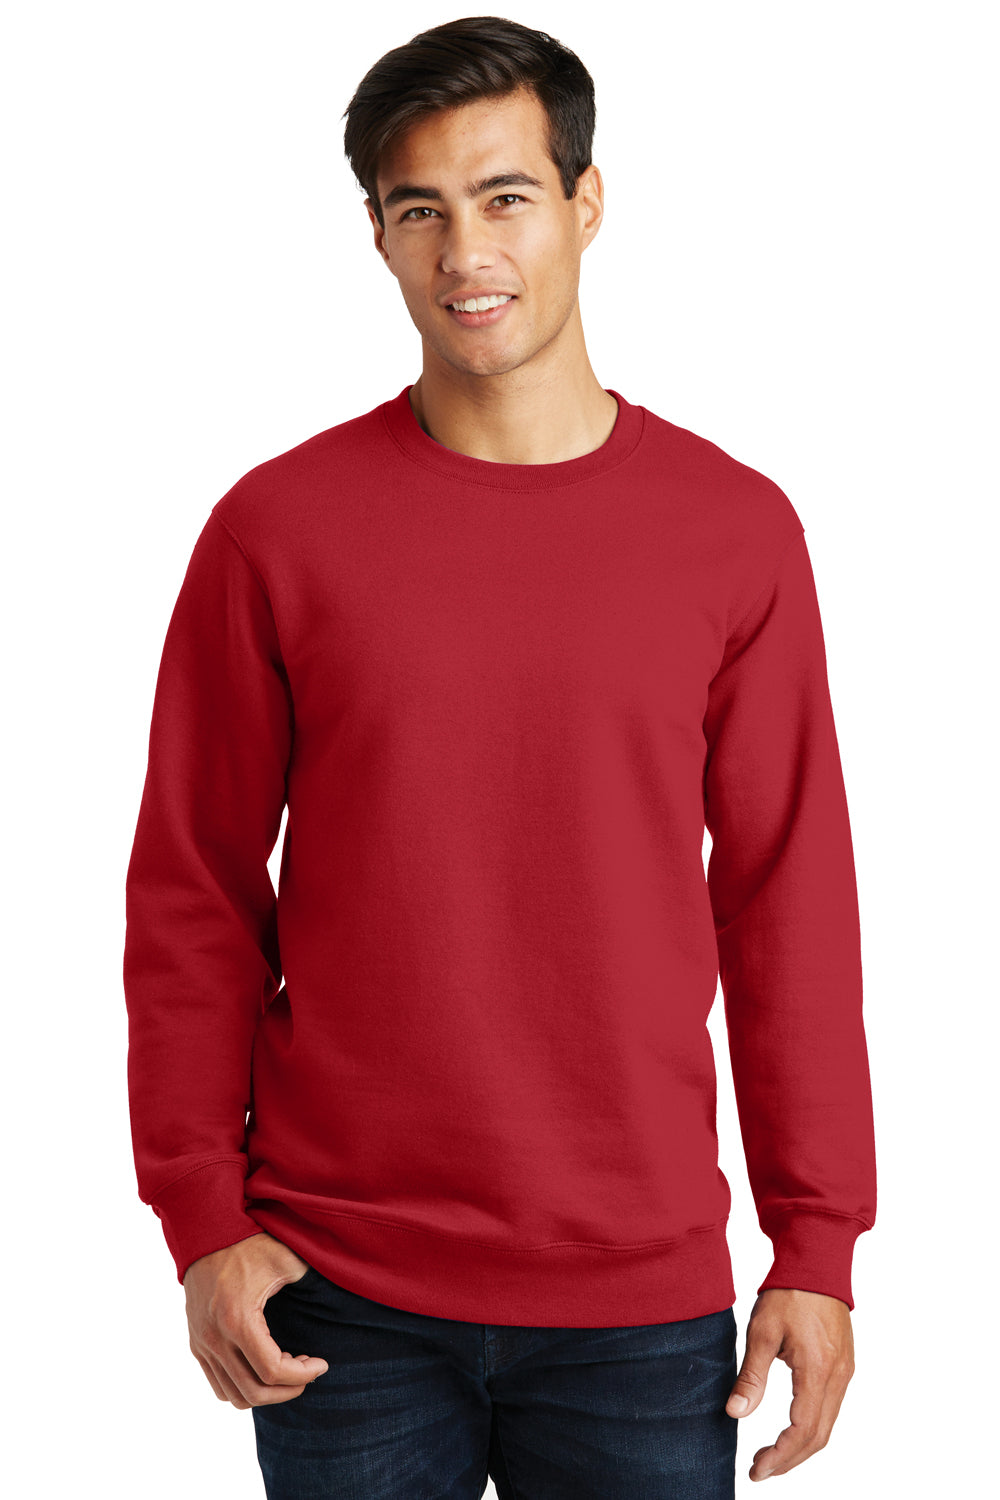 Port & Company PC850 Mens Fan Favorite Fleece Crewneck Sweatshirt Cardinal Red Front